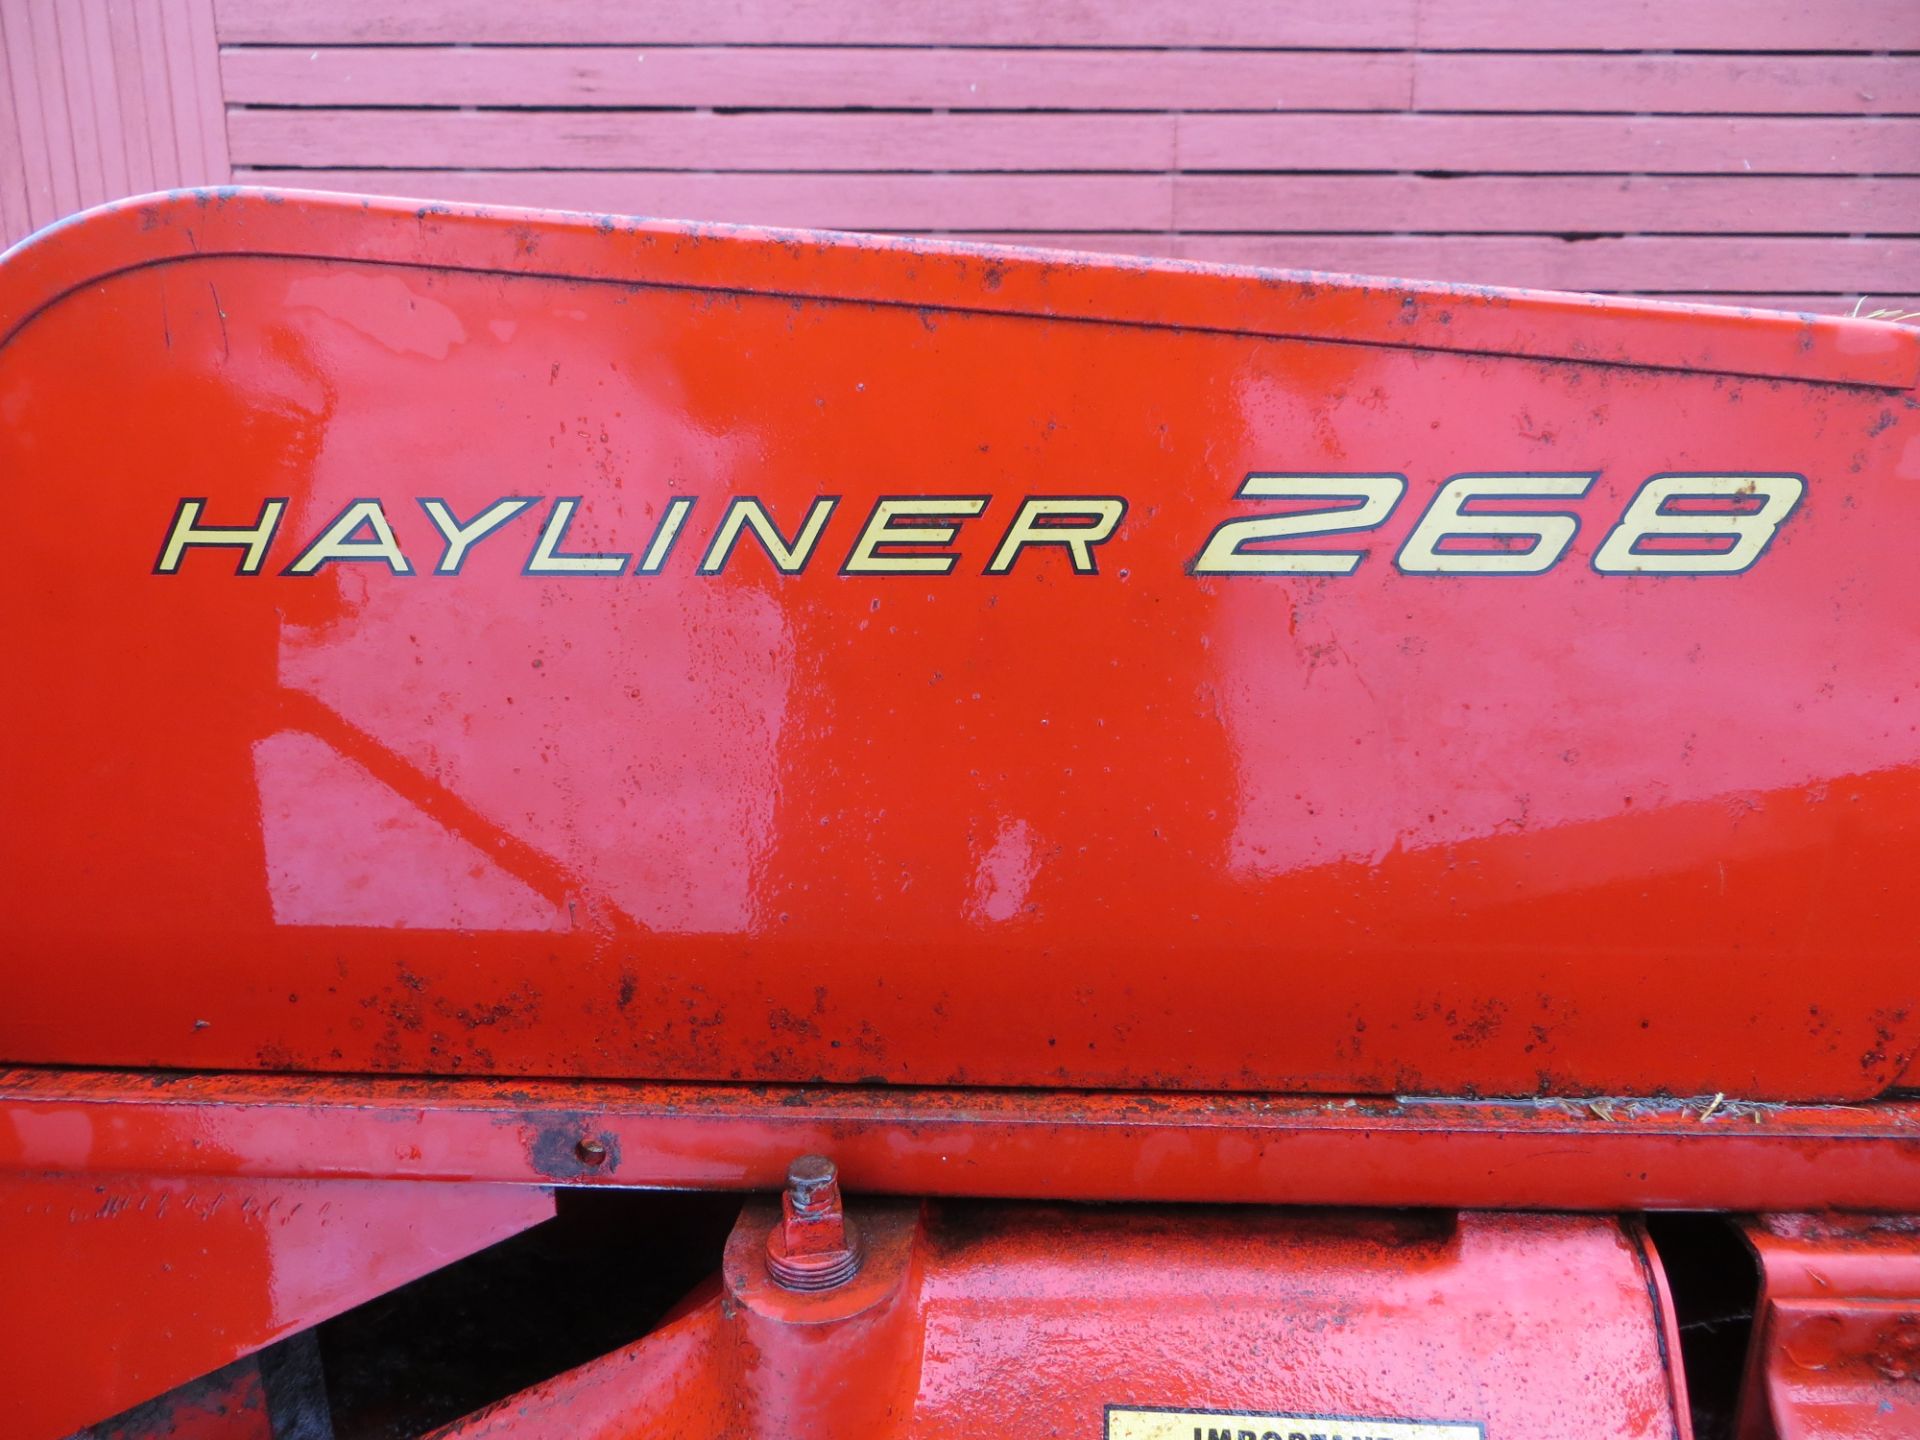 268 New Holland Hayliner baler w/kicker - Image 2 of 7